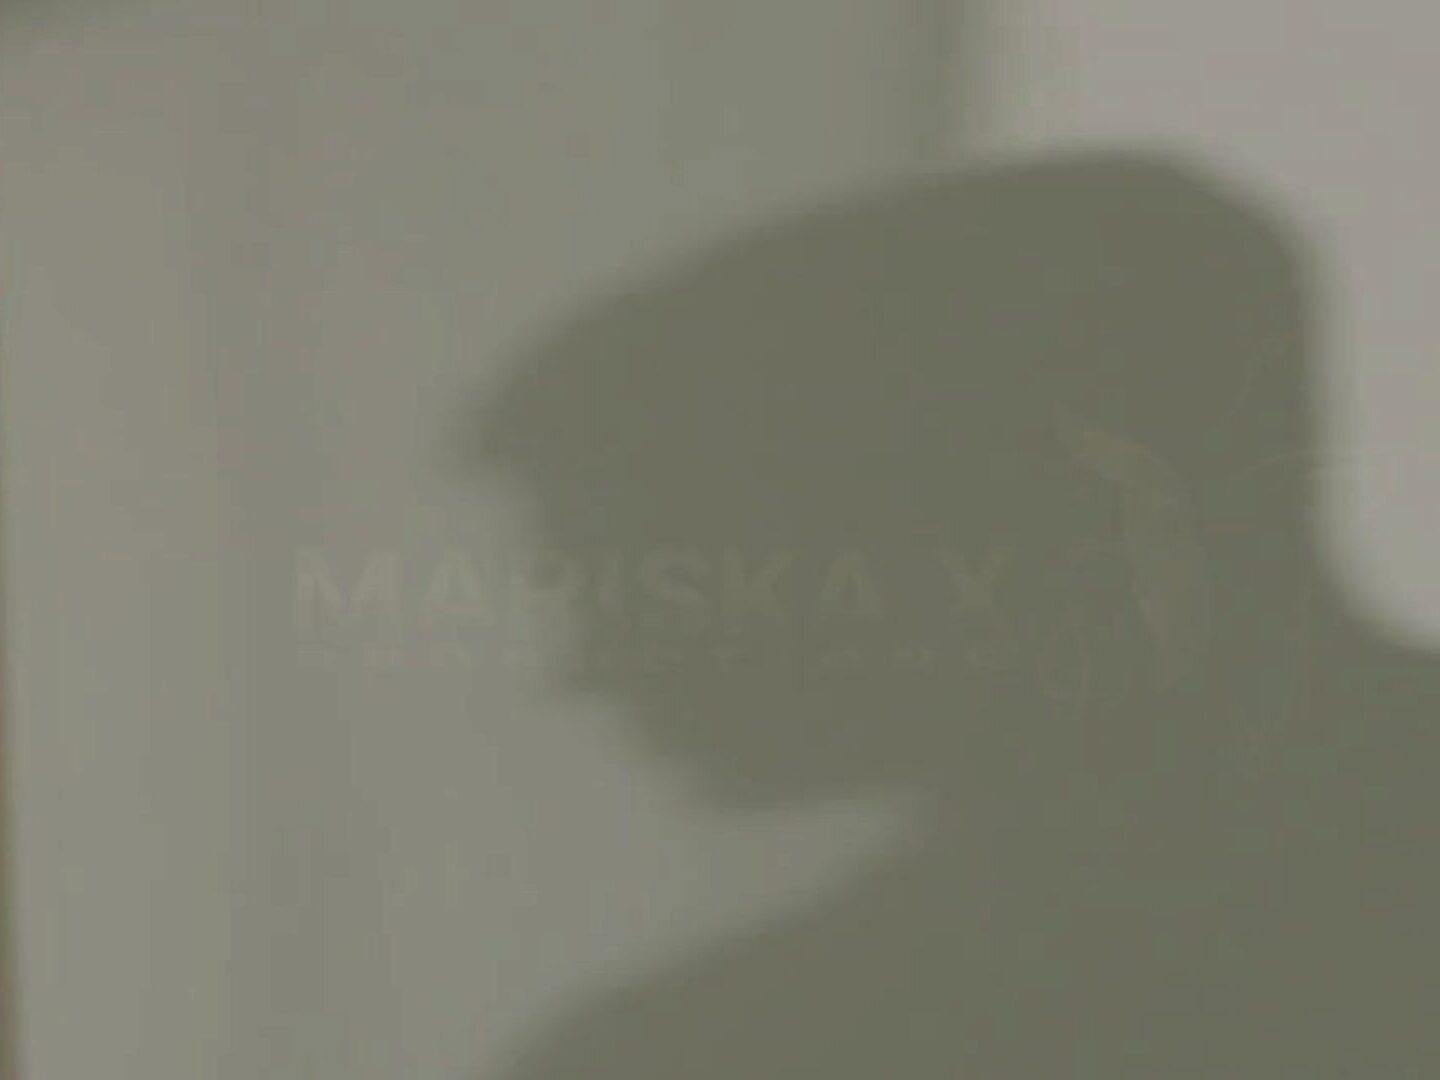 Mariska X Porno XXX-Videot